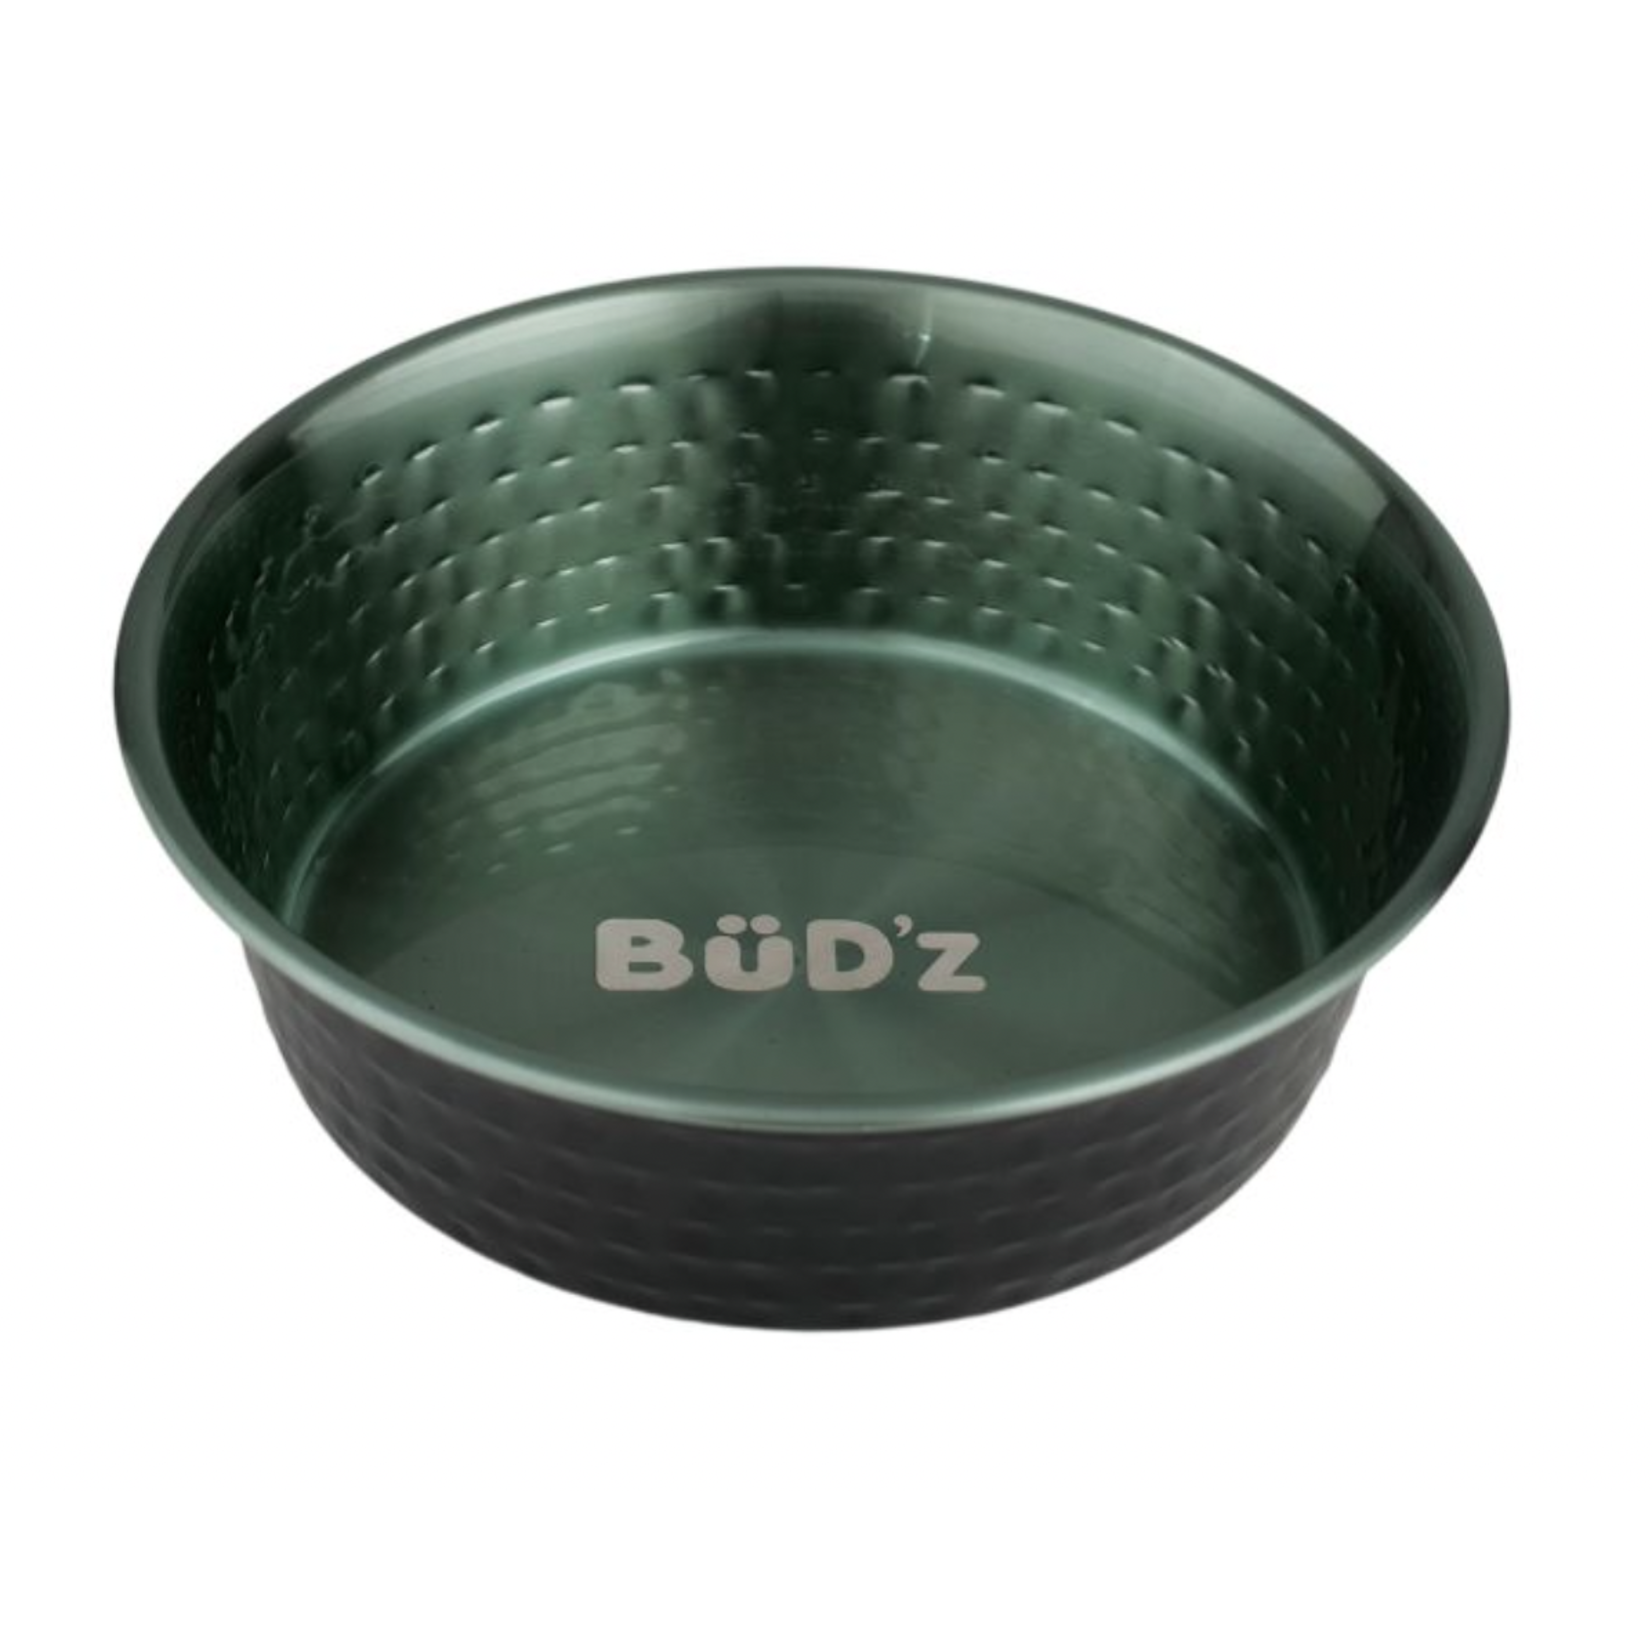 BUD-Z BUD'Z STAINLESS STEEL BOWL, HAMMERED INTERIOR - GREEN 3900ml (132oz)